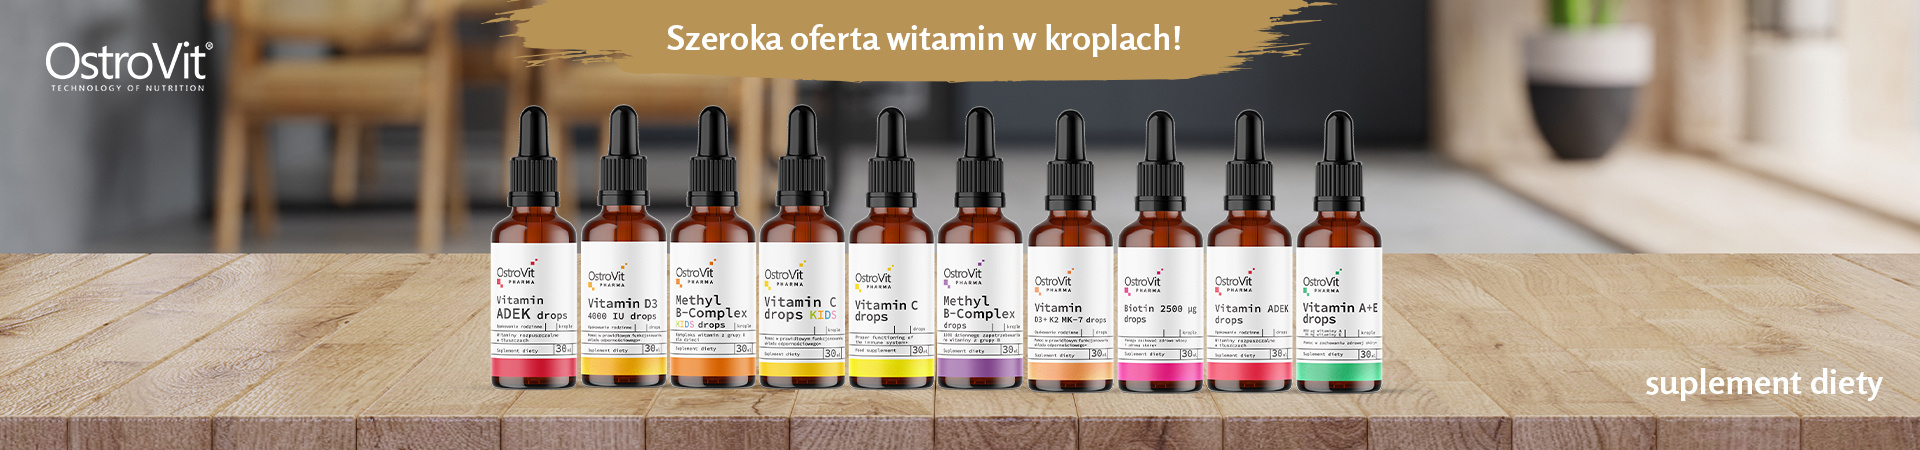 Ostrovit_pharma